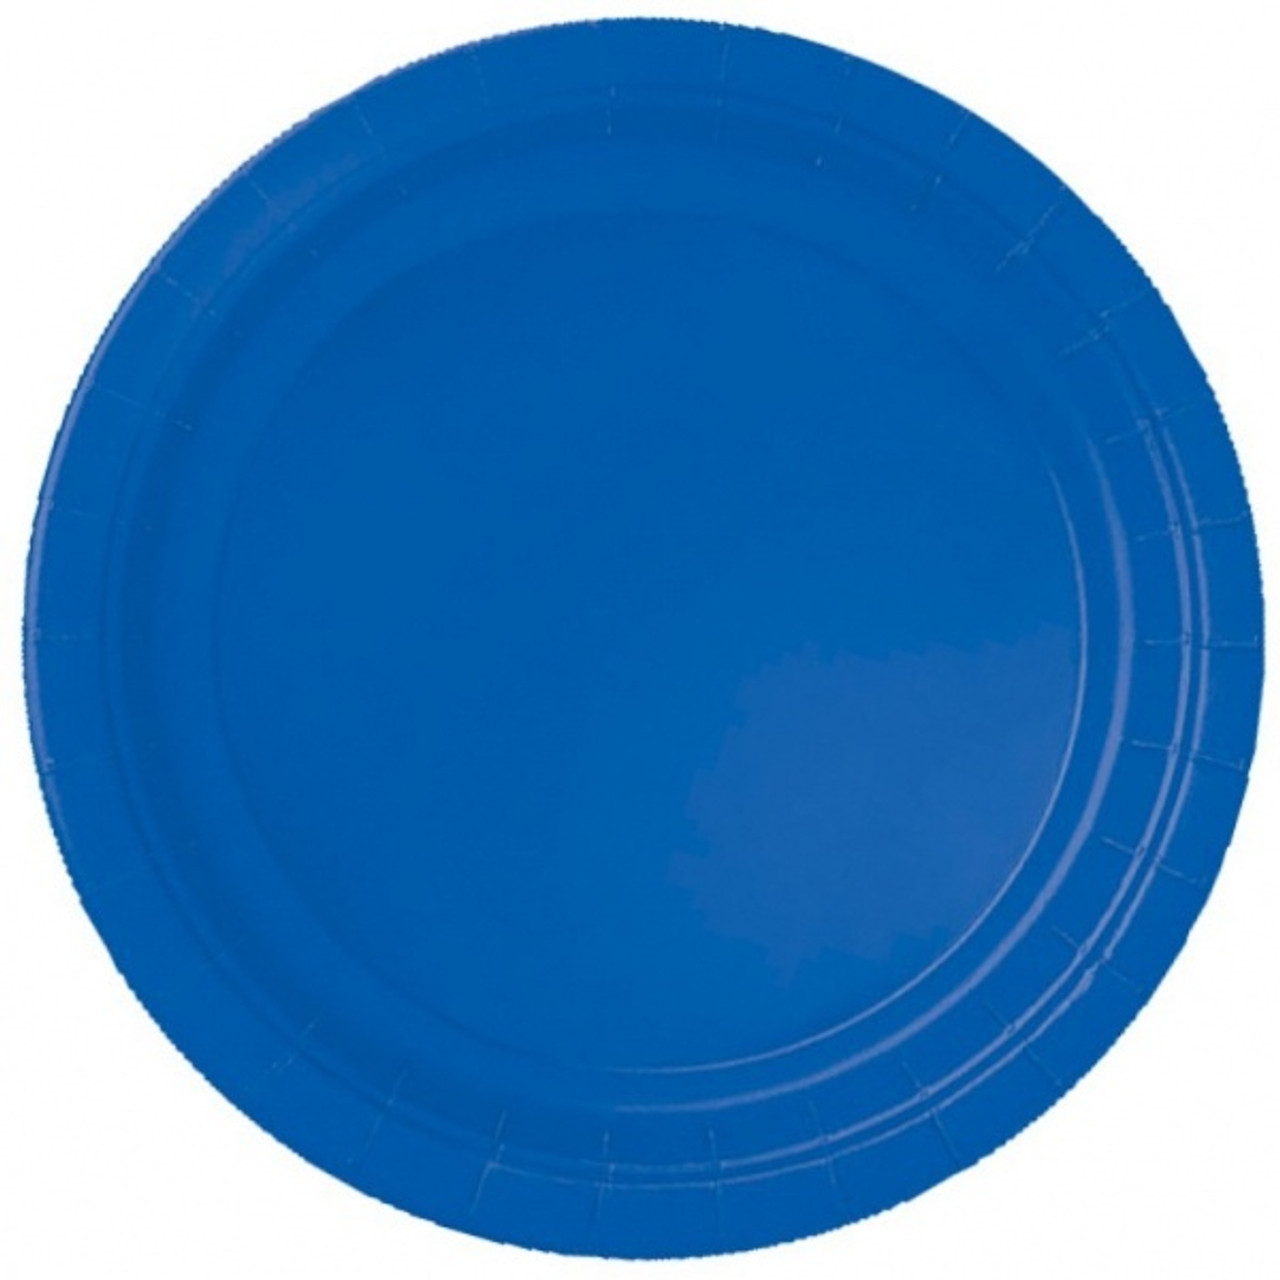 BRIGHT ROYAL BLUE 9 INCH PLATES